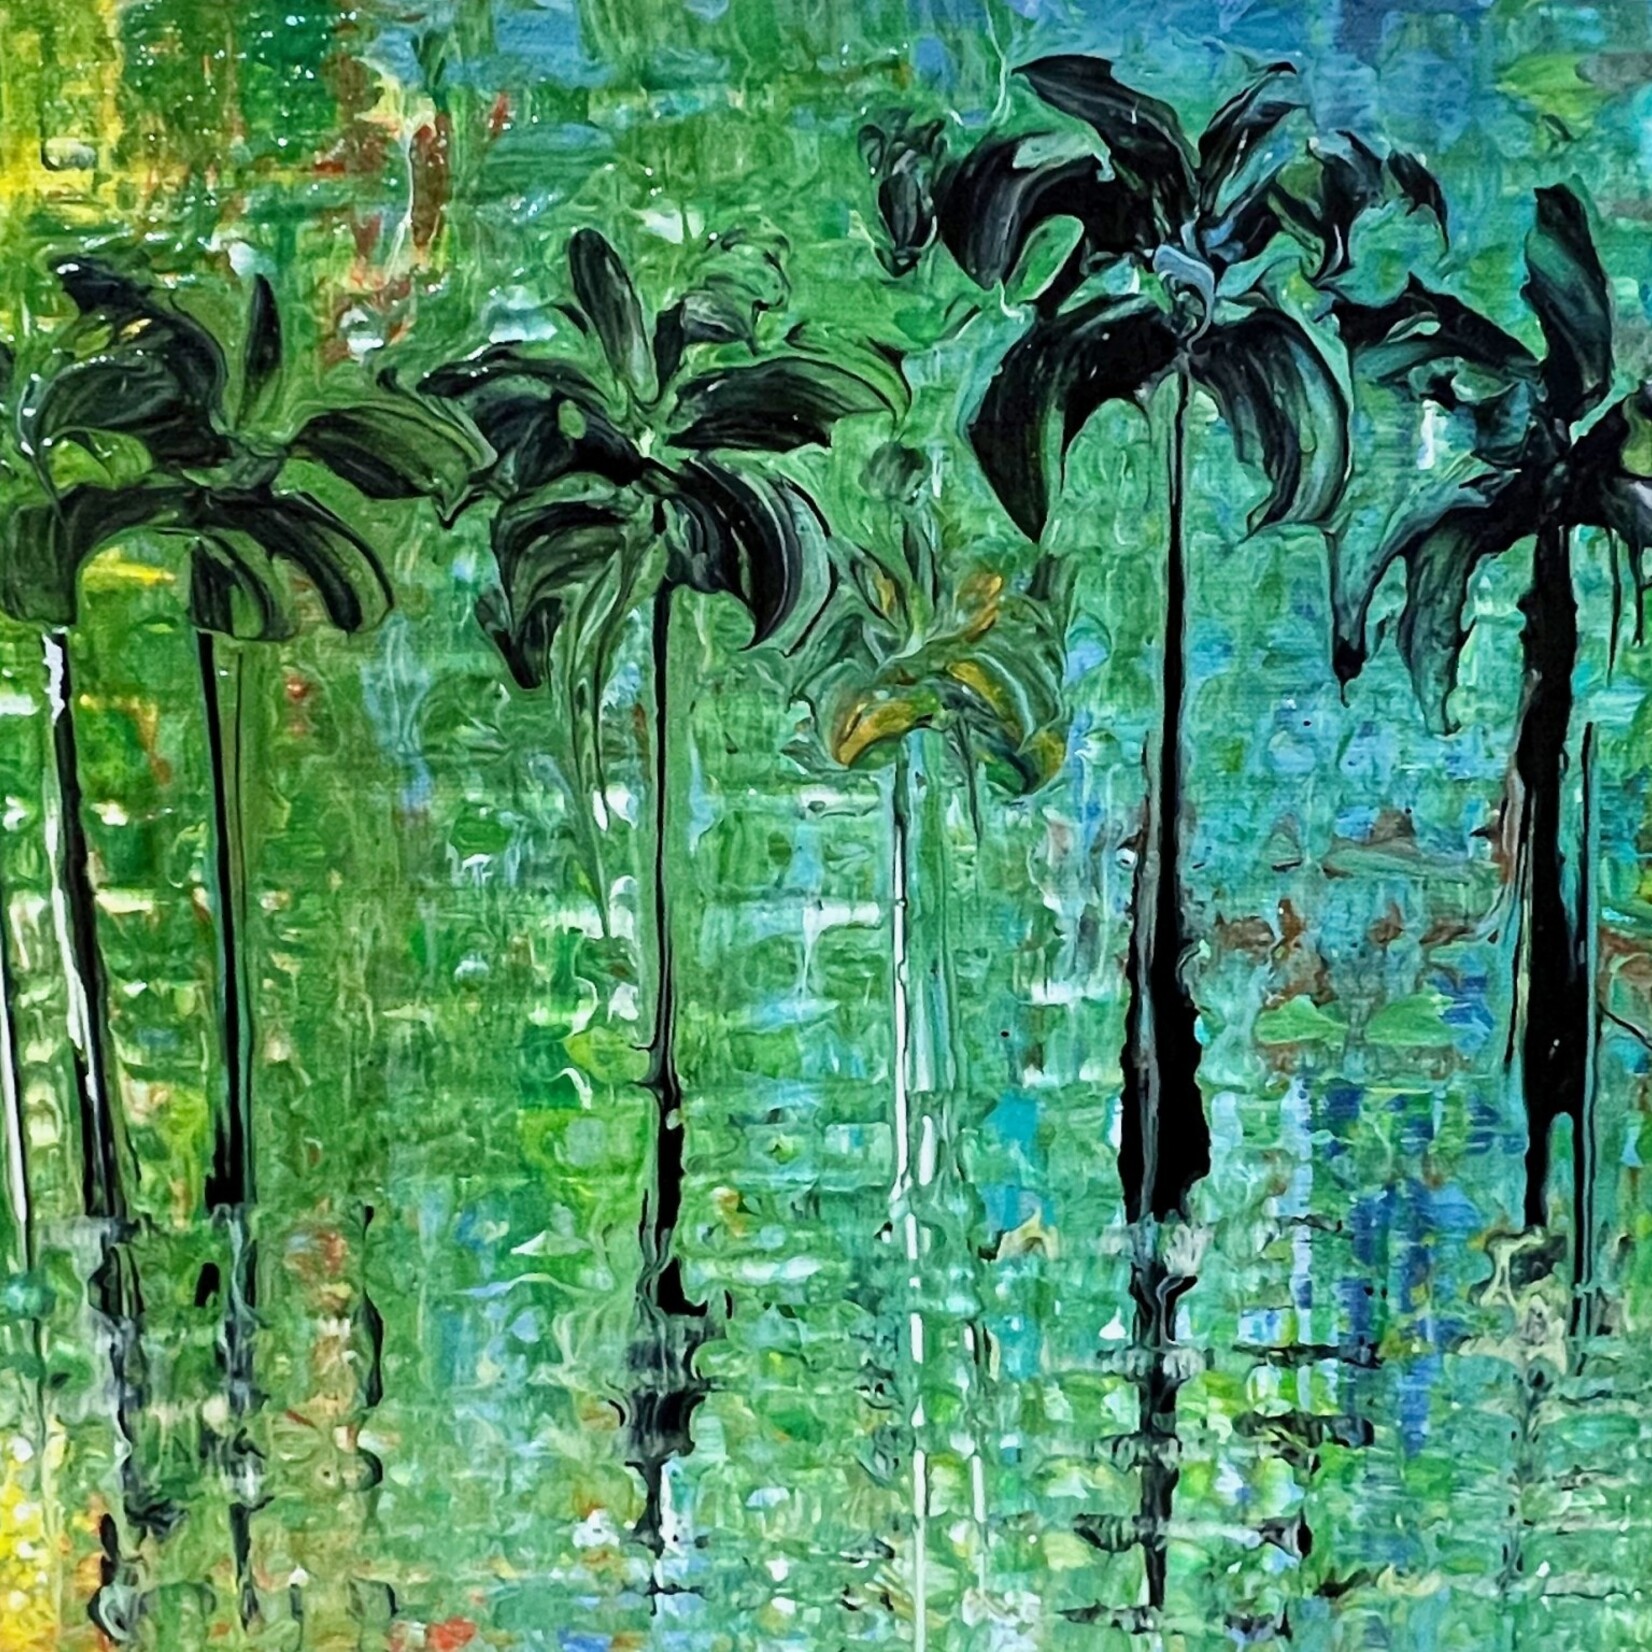 Lisa Jill Allison "Fine Friends" Orig acrylic/Mixed media on gw canvas, 16x12"", LISA